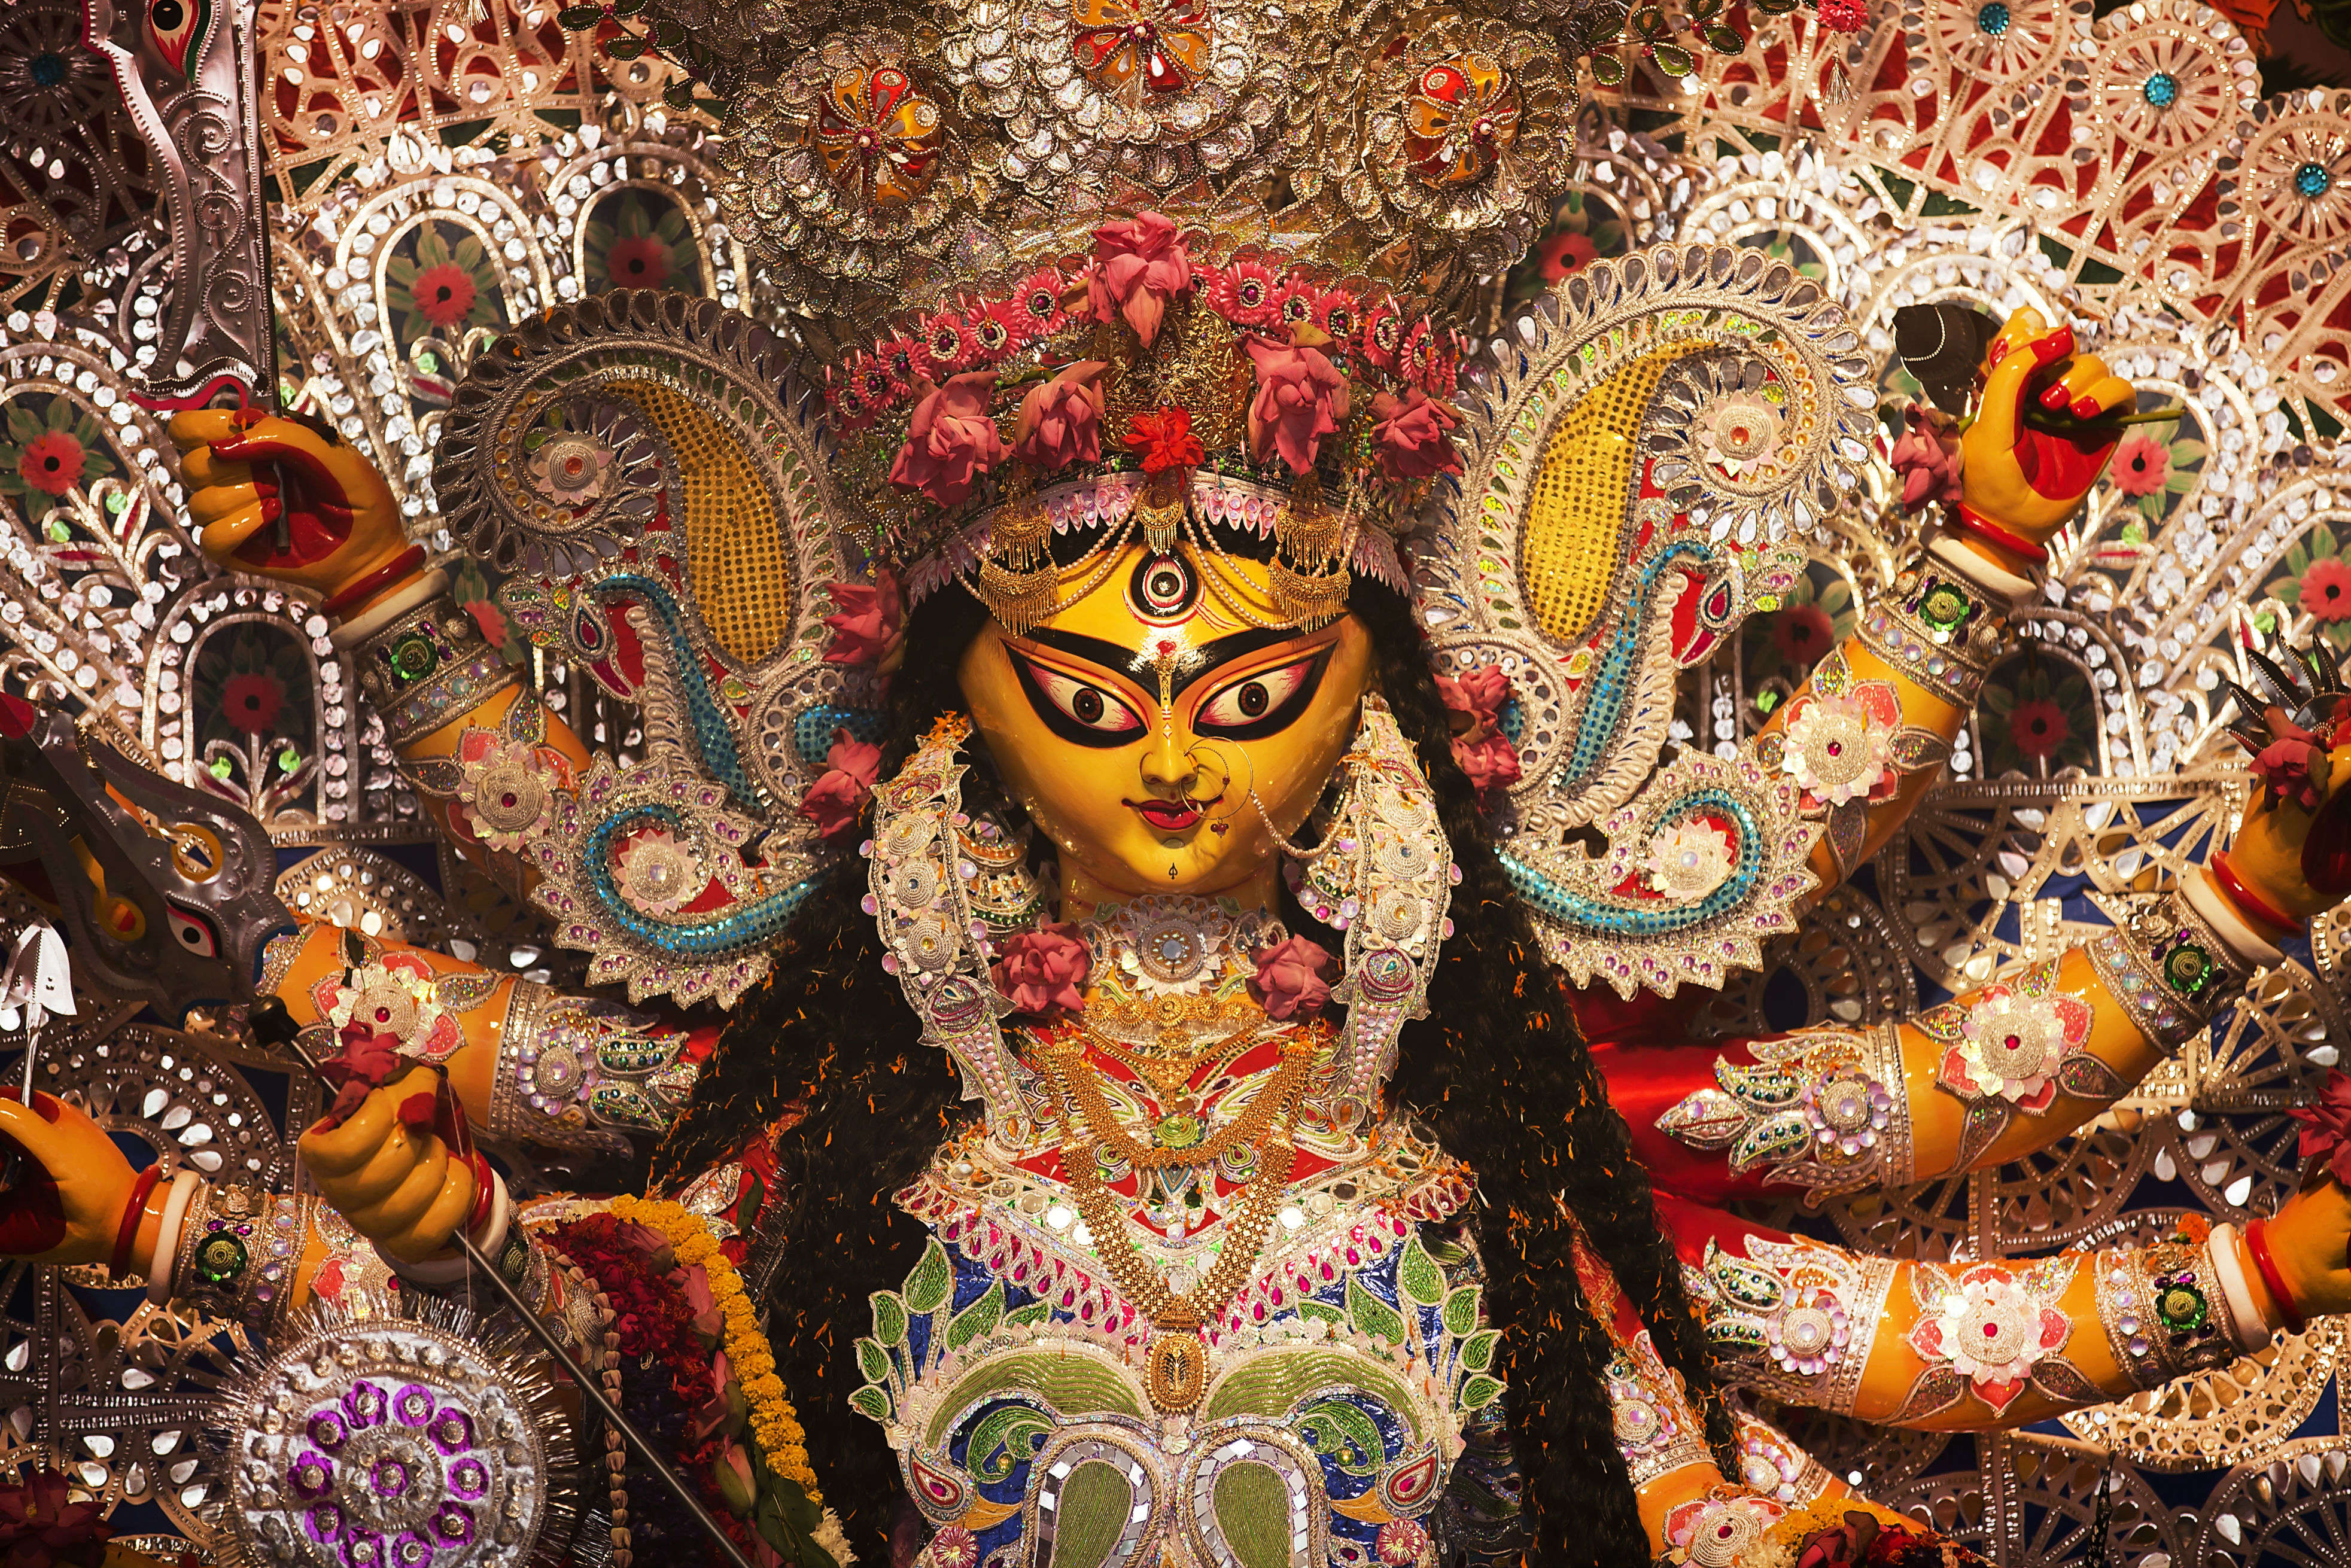 North Kolkata Durga Puja 2018 | Durga Puja Celebration in North Kolkata